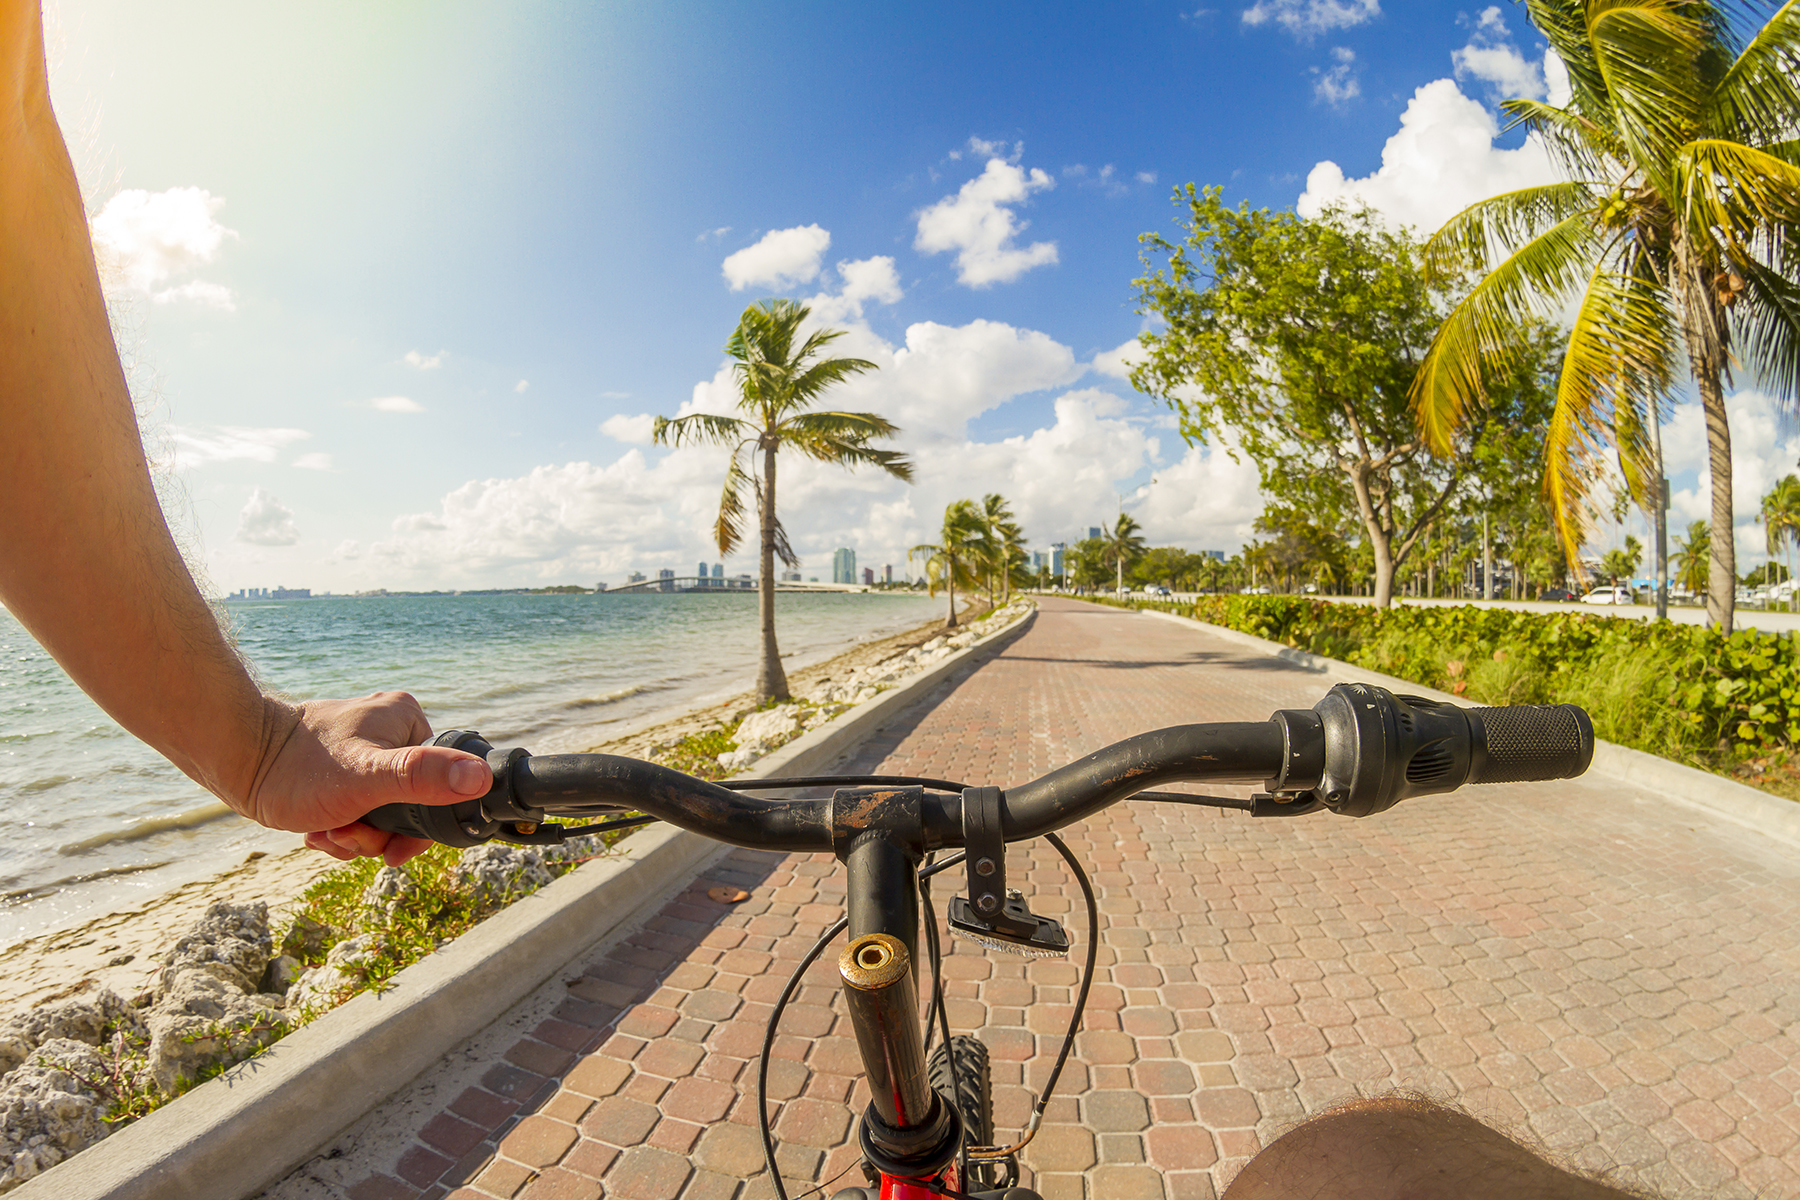 Bike rider going down Miami street